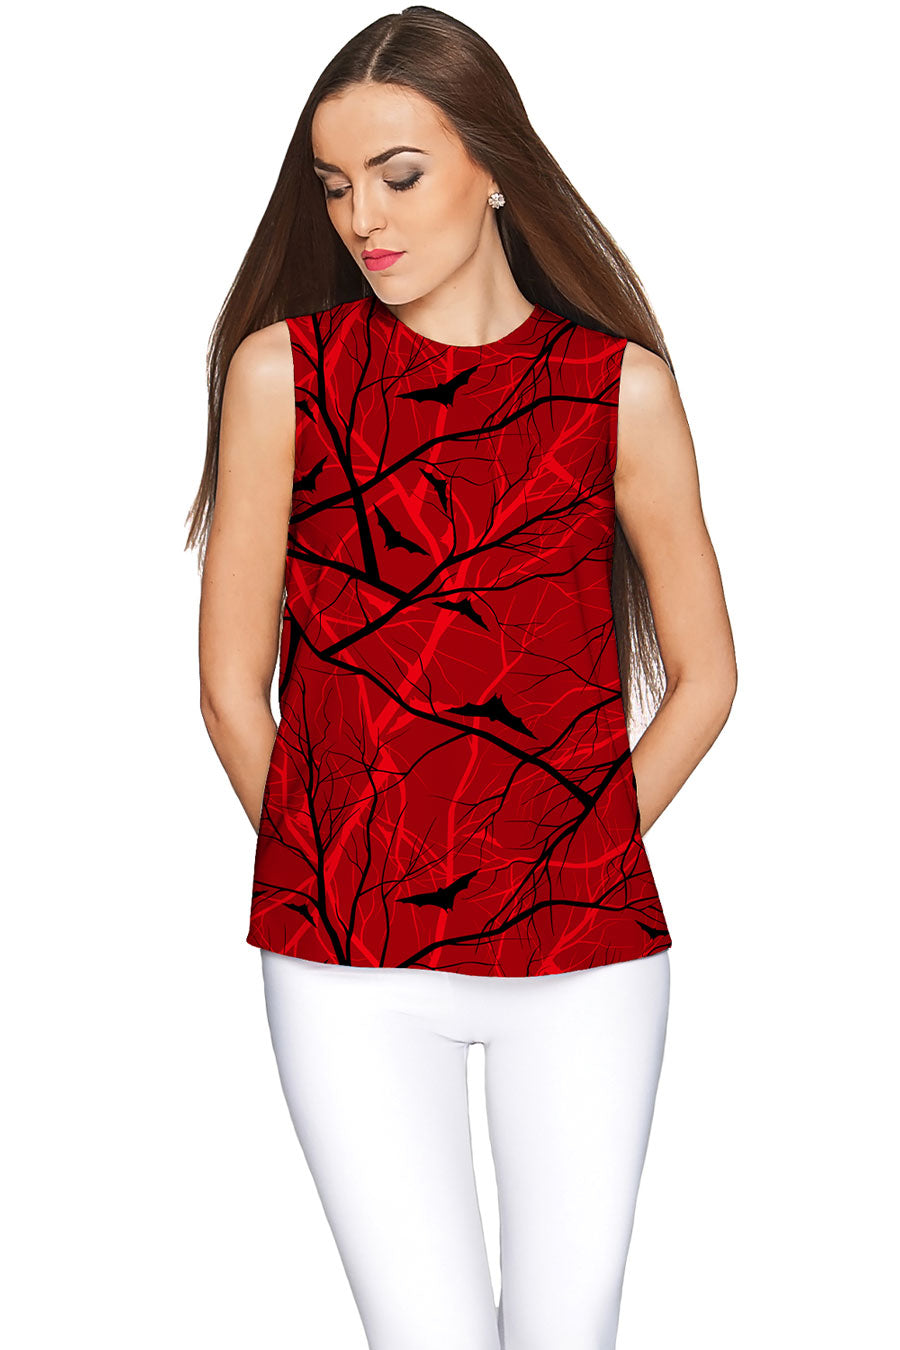 Full Moon Emily Red Fall Bat Printed Halloween Sleeveless Top - Women - Pineapple Clothing